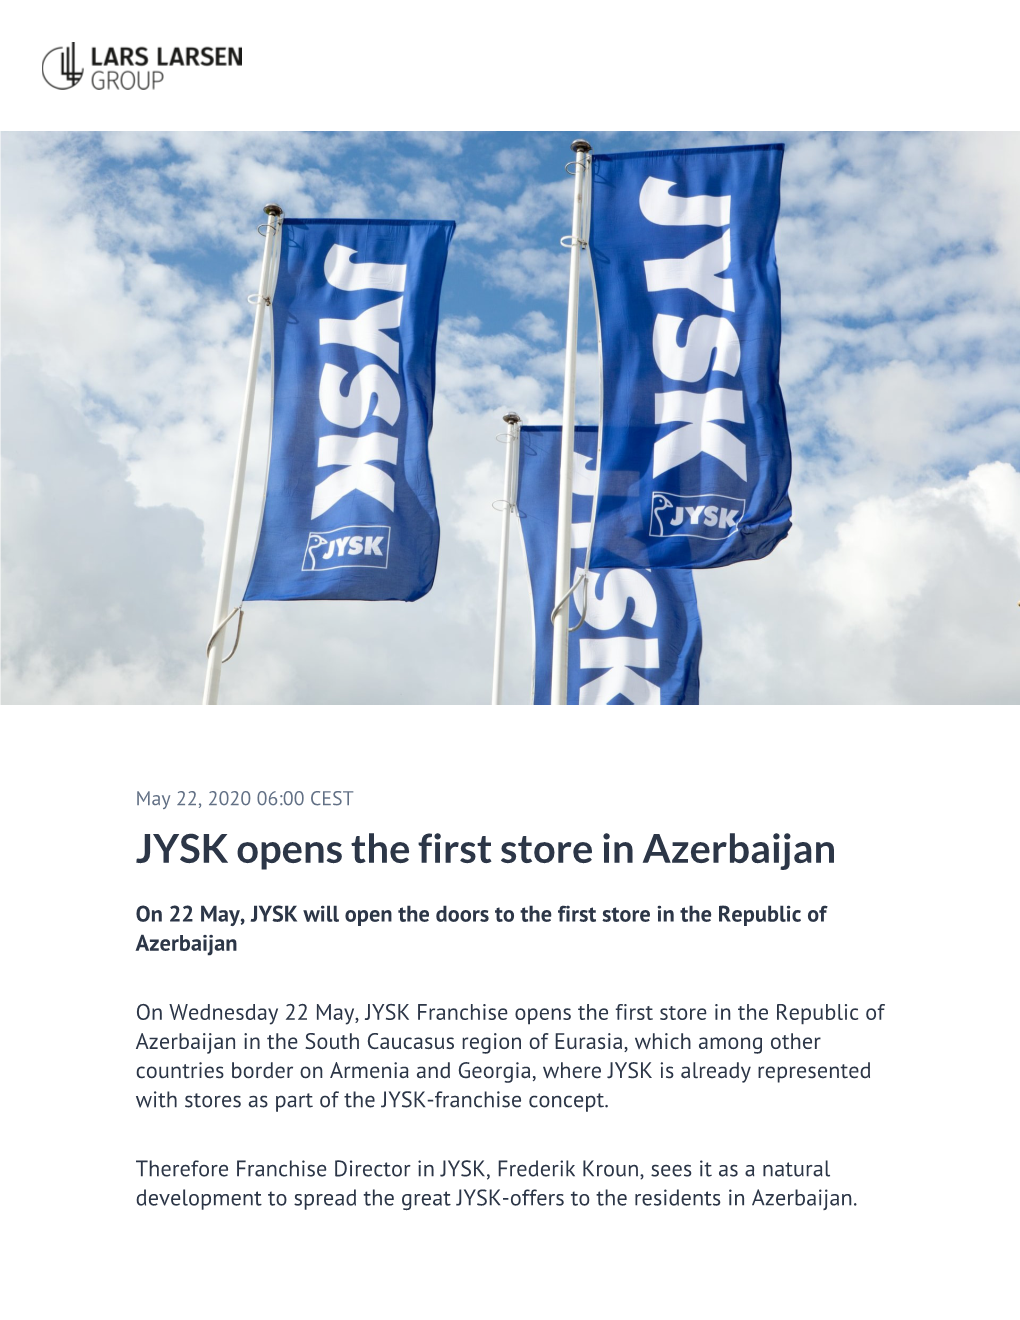 JYSK Opens the First Store in Azerbaijan